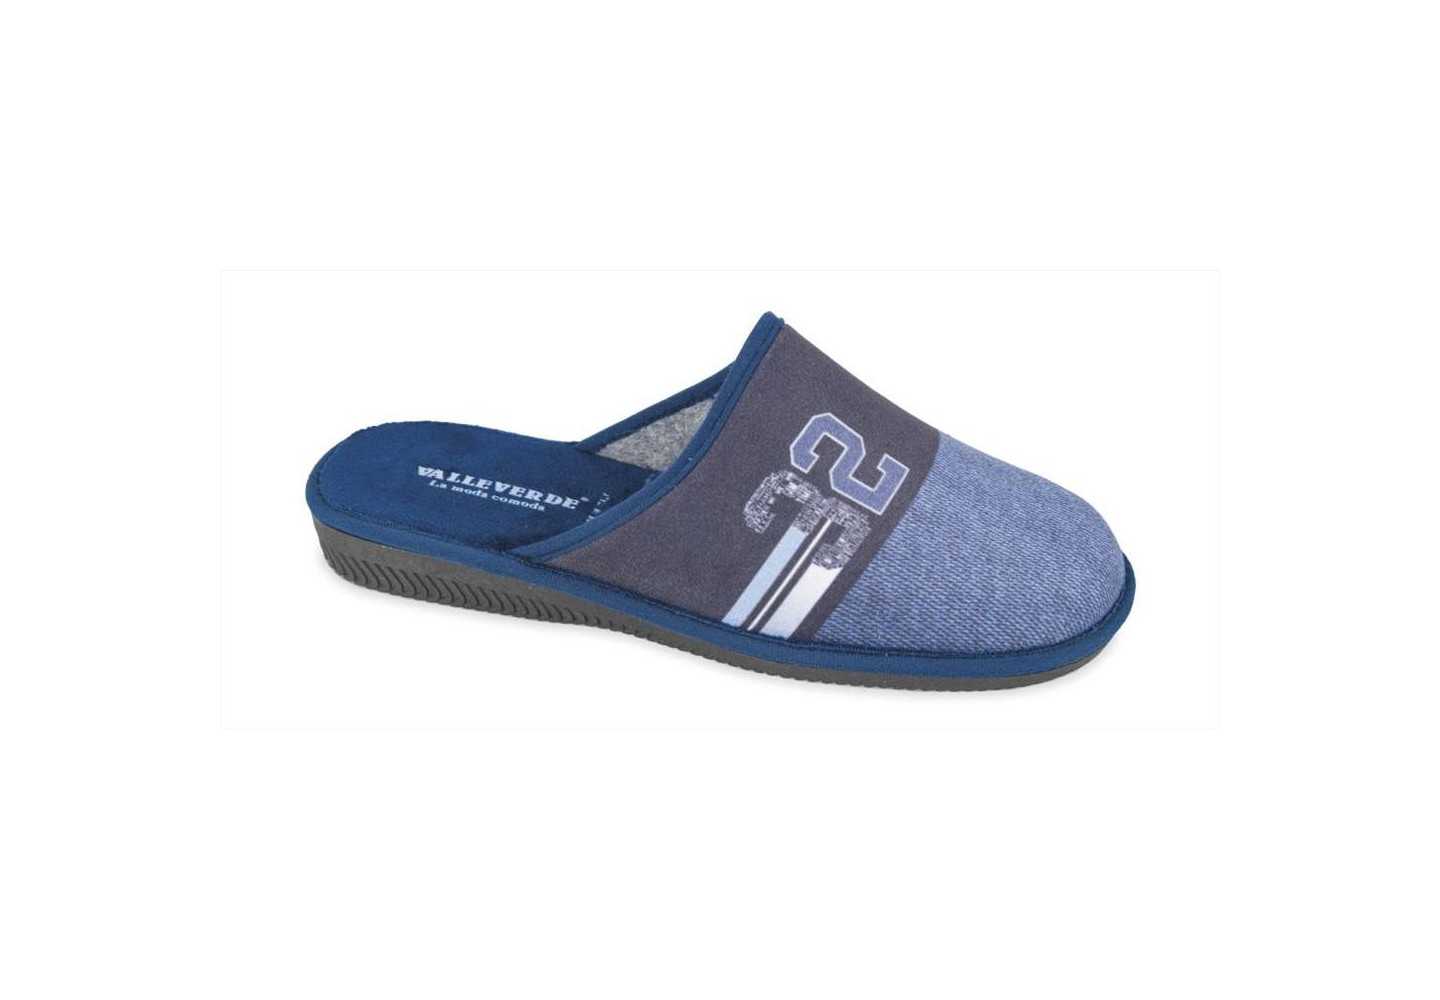 Pantofole da donna invernali Valleverde 58800 blu